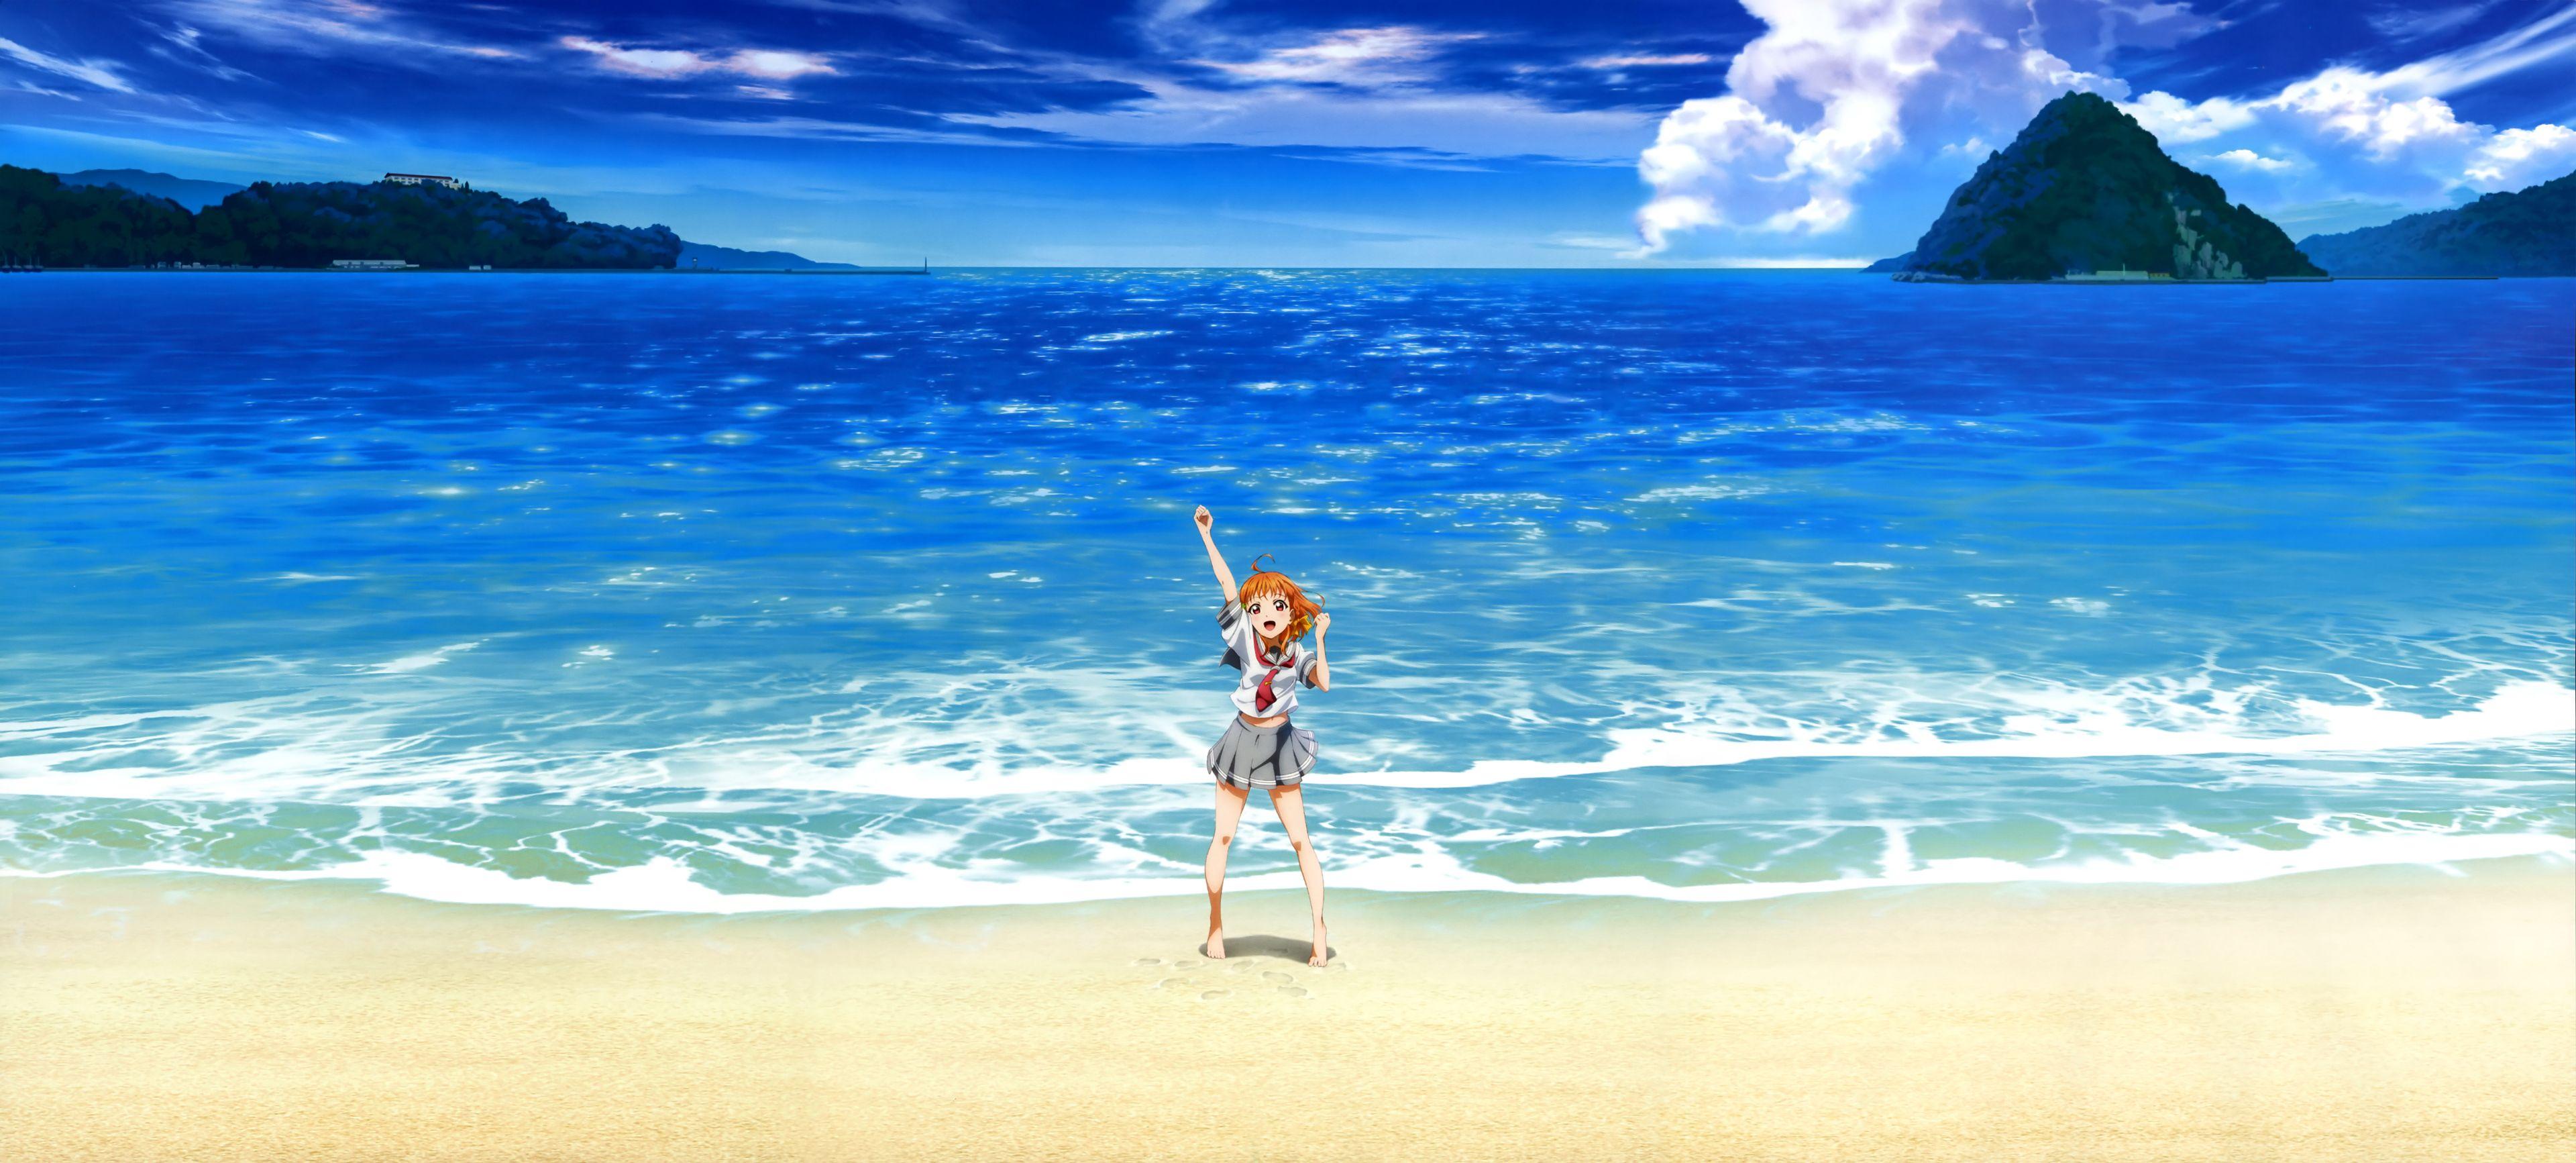 Anime Beach Scenery Wallpaper Free Anime Beach Scenery Background